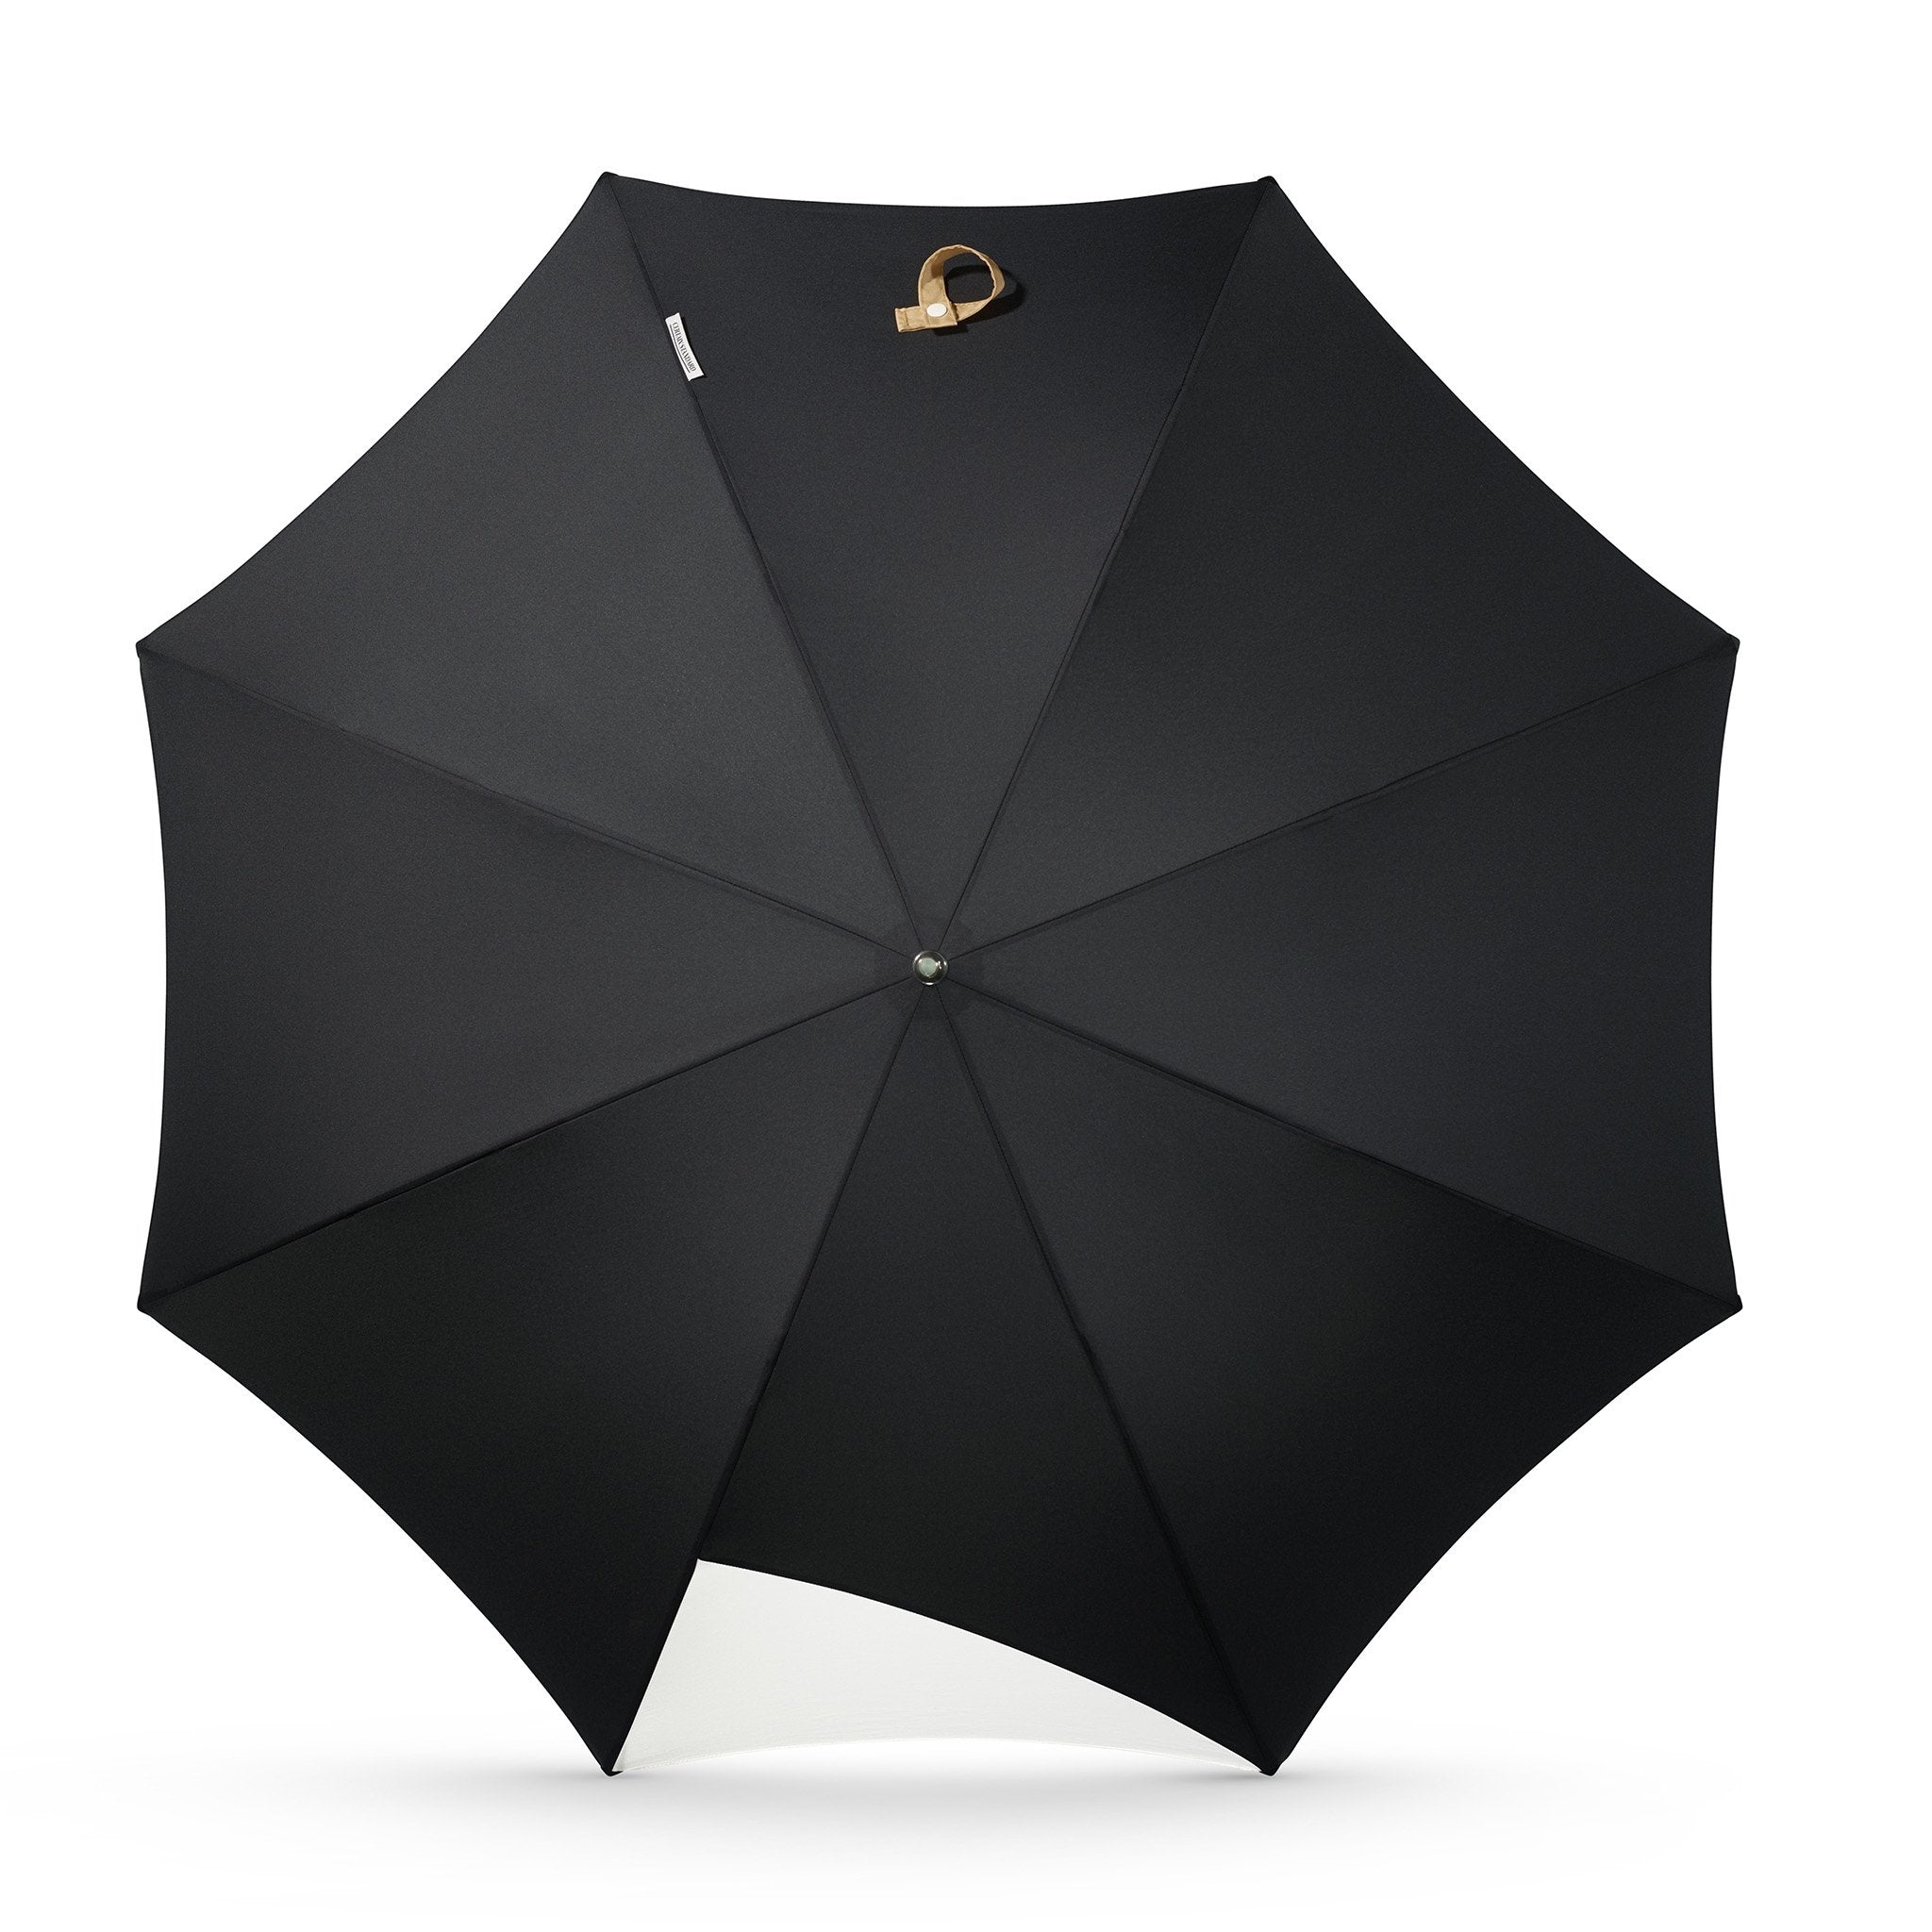 Gramercy Umbrella, Certain Standard